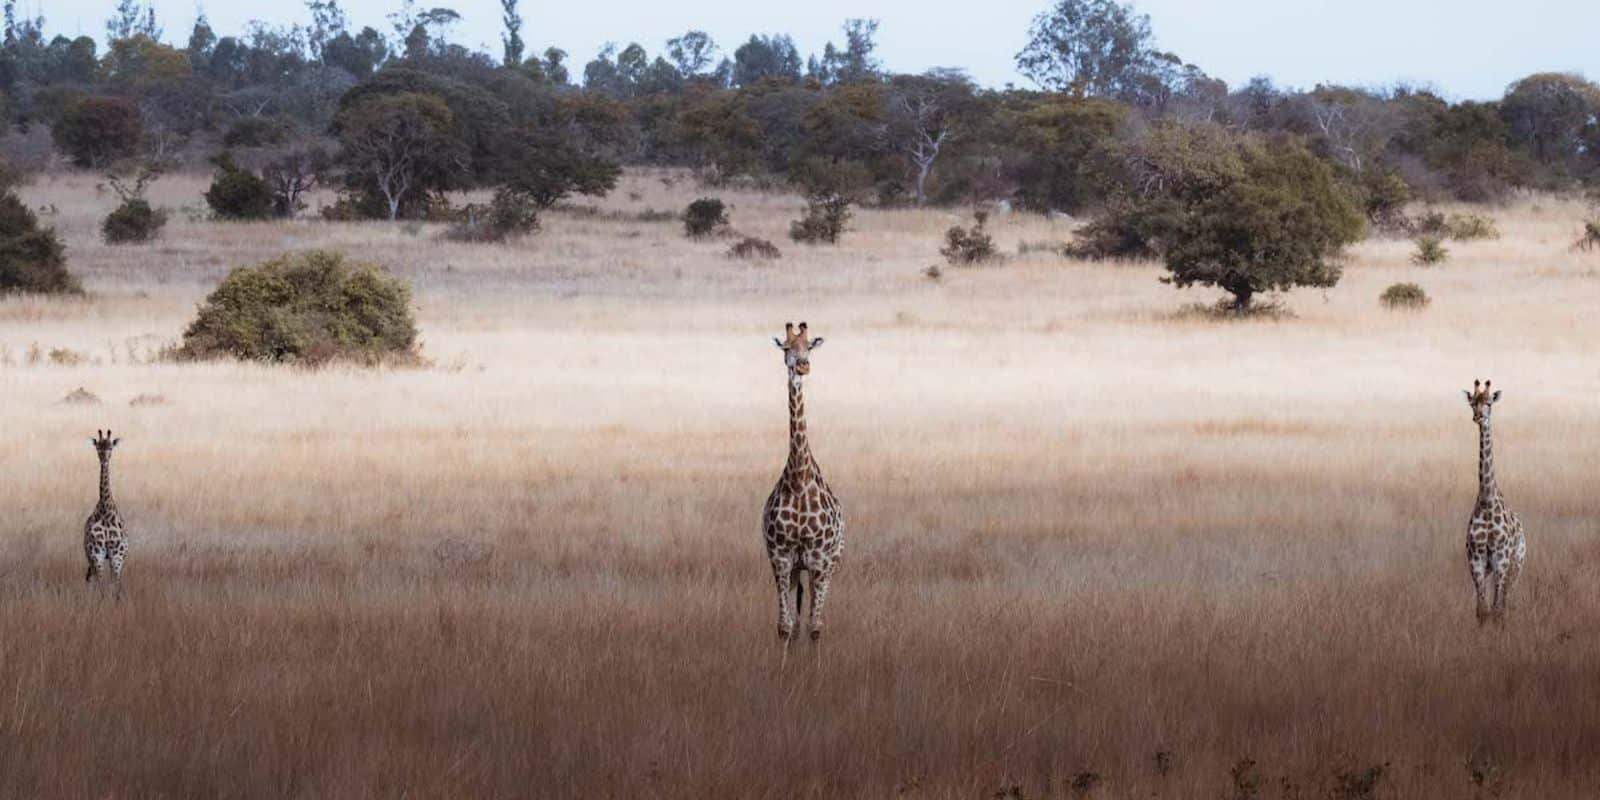 three giraffes standing in a field